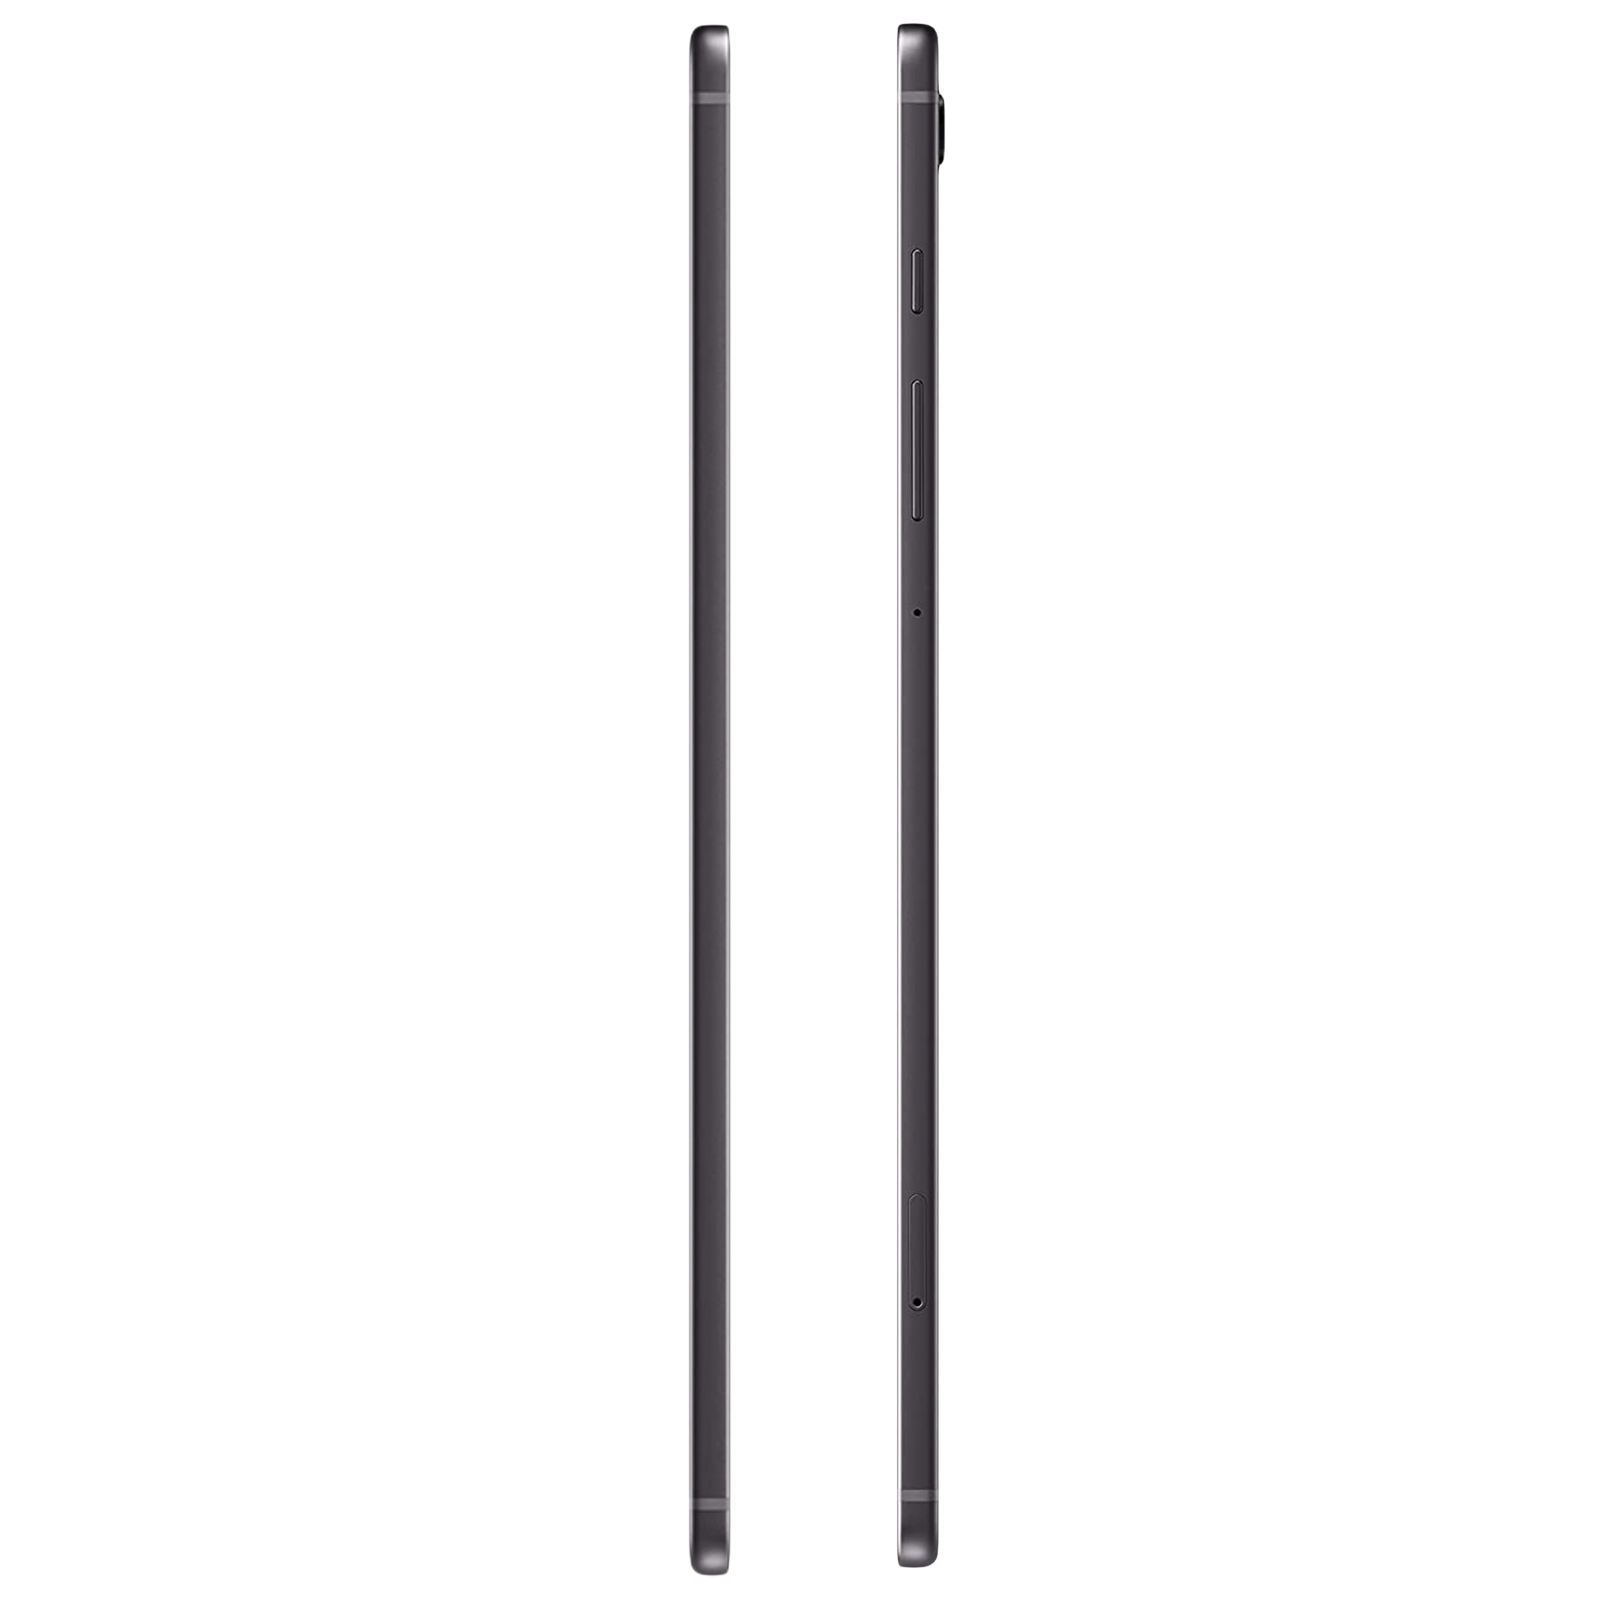 SAMSUNG Galaxy Tab S6 Lite Wi-Fi + 4G Android Tablet (10.4 Inch, 4GB RAM, 128GB ROM, Oxford Gray)_4